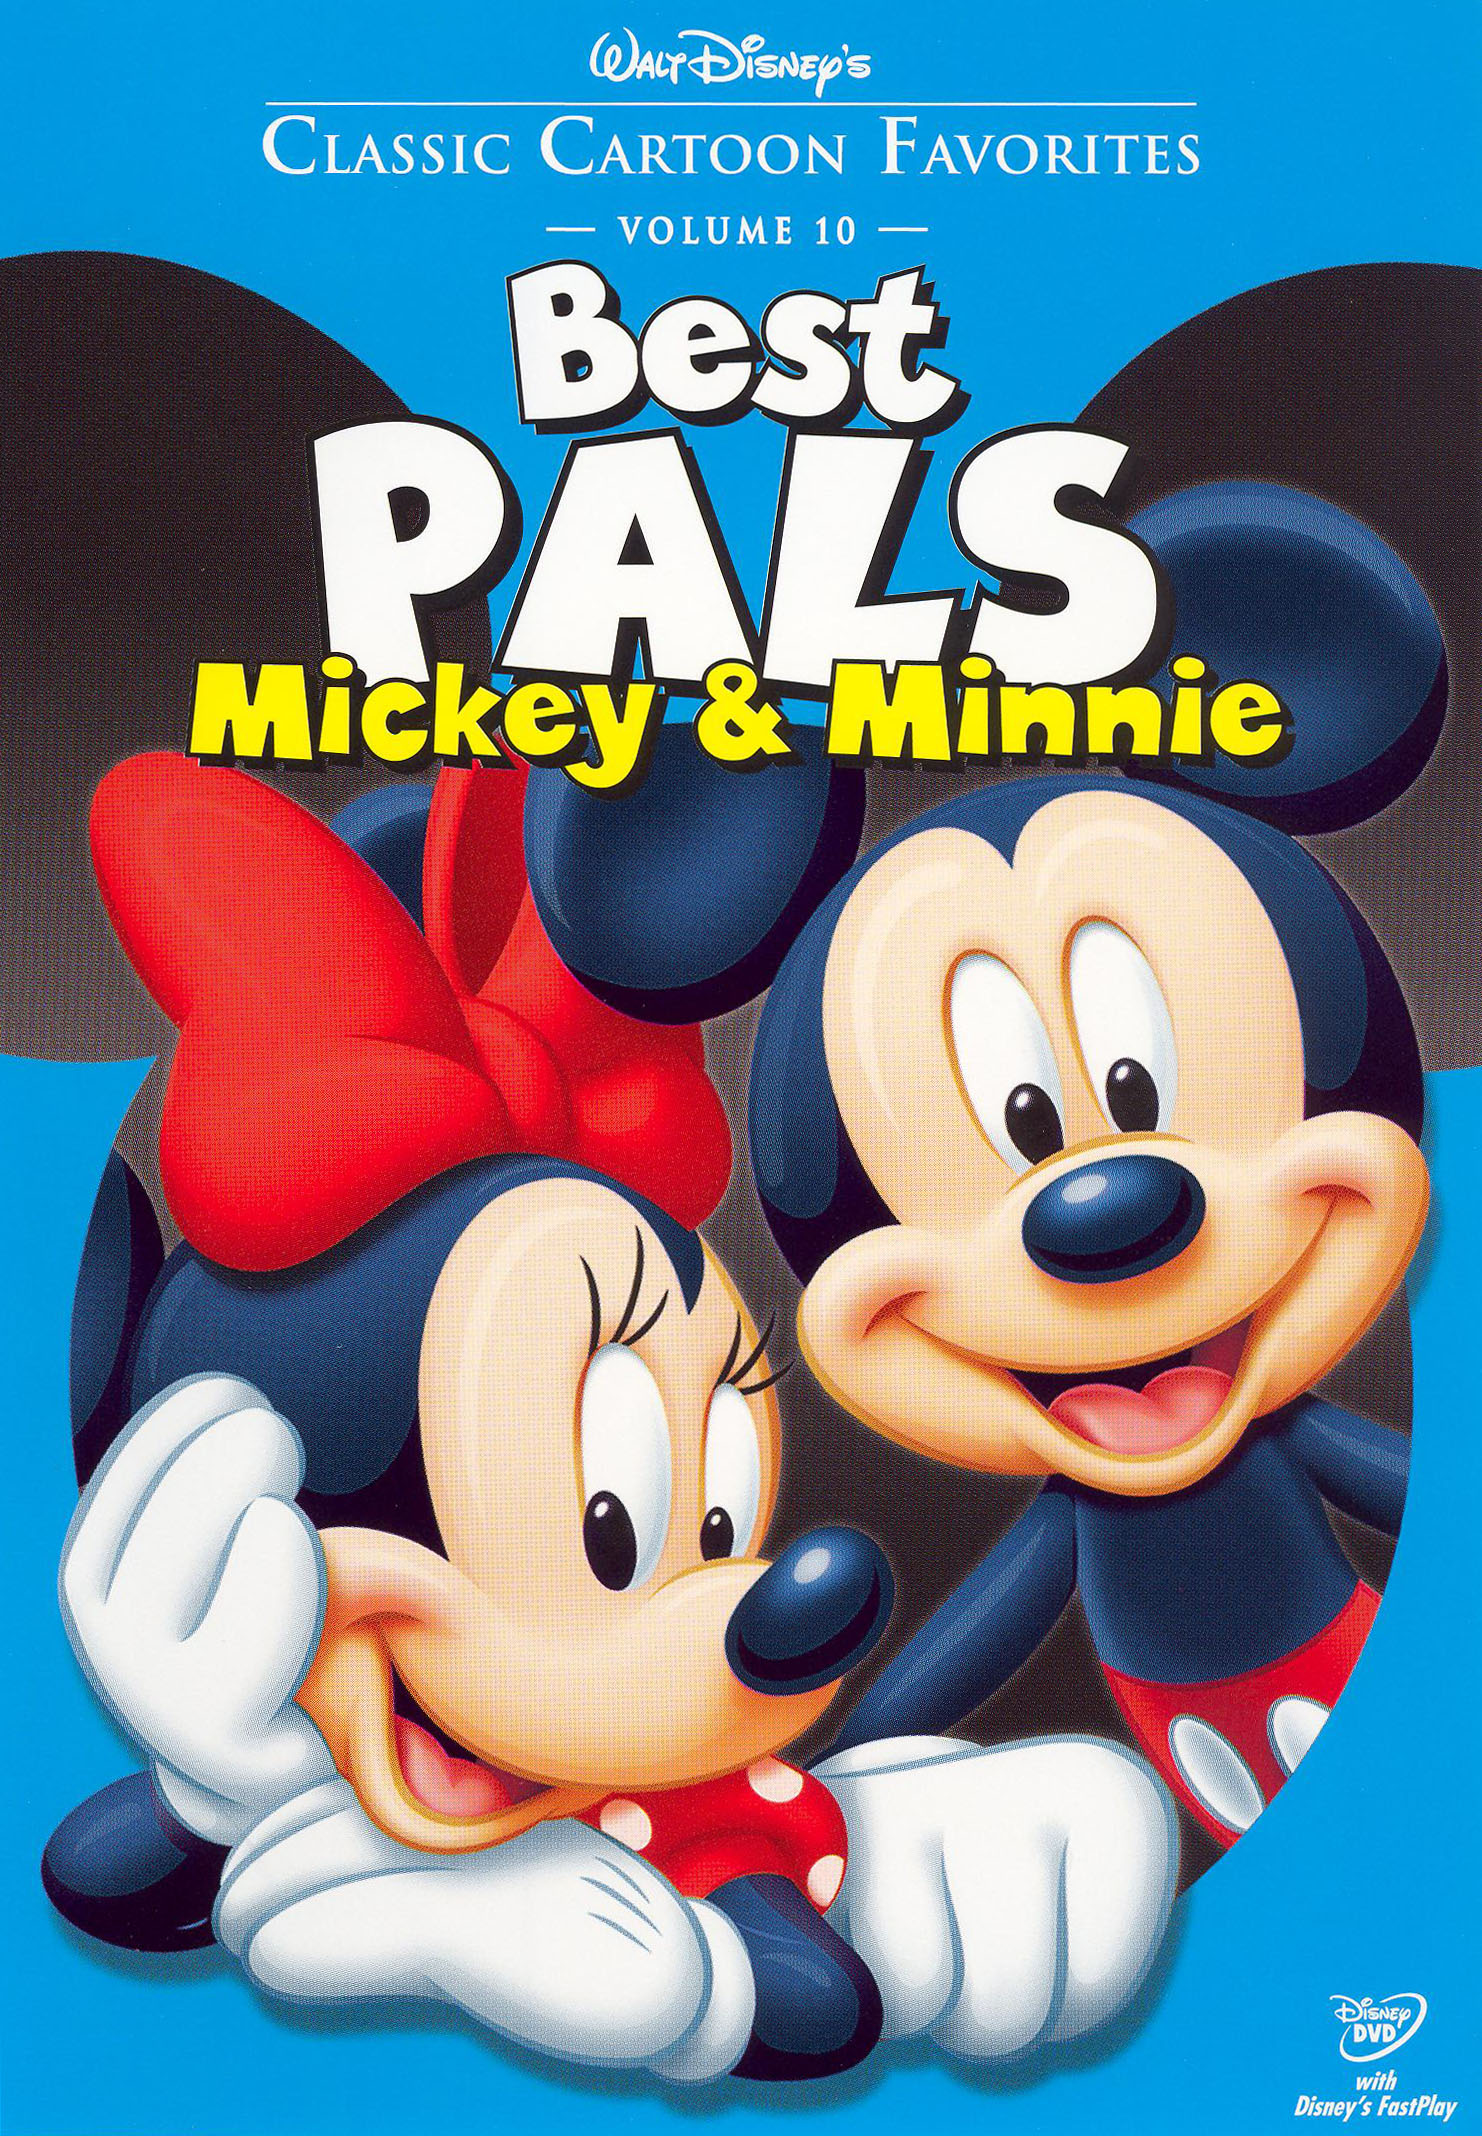 My Disney Classic Cartoon Favorites Dvd Collection Youtube Photos